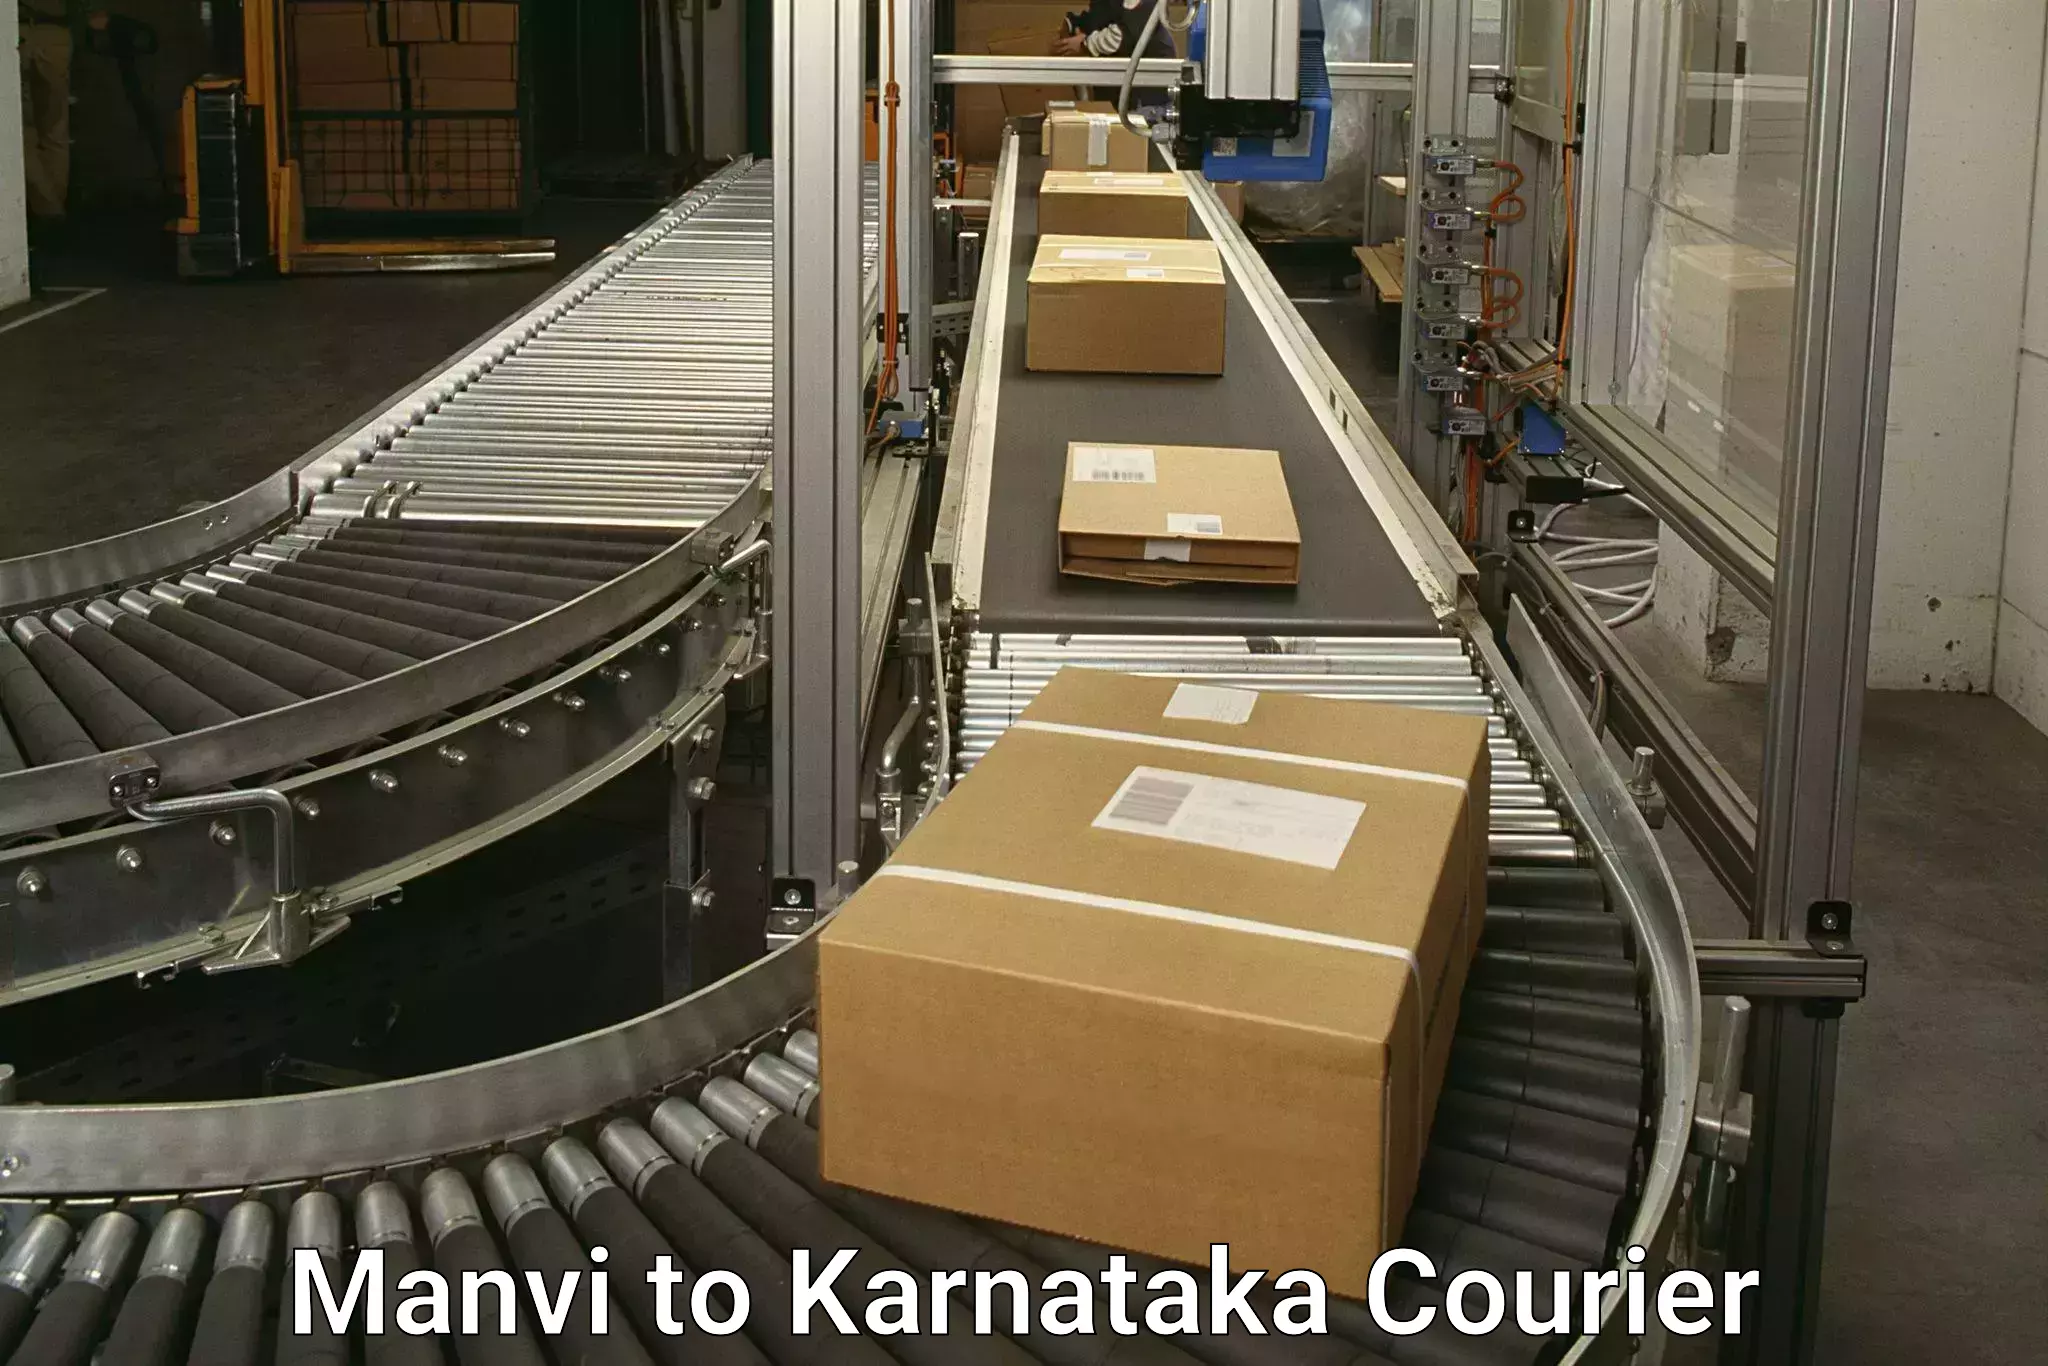 Advanced tracking systems Manvi to Bangalore